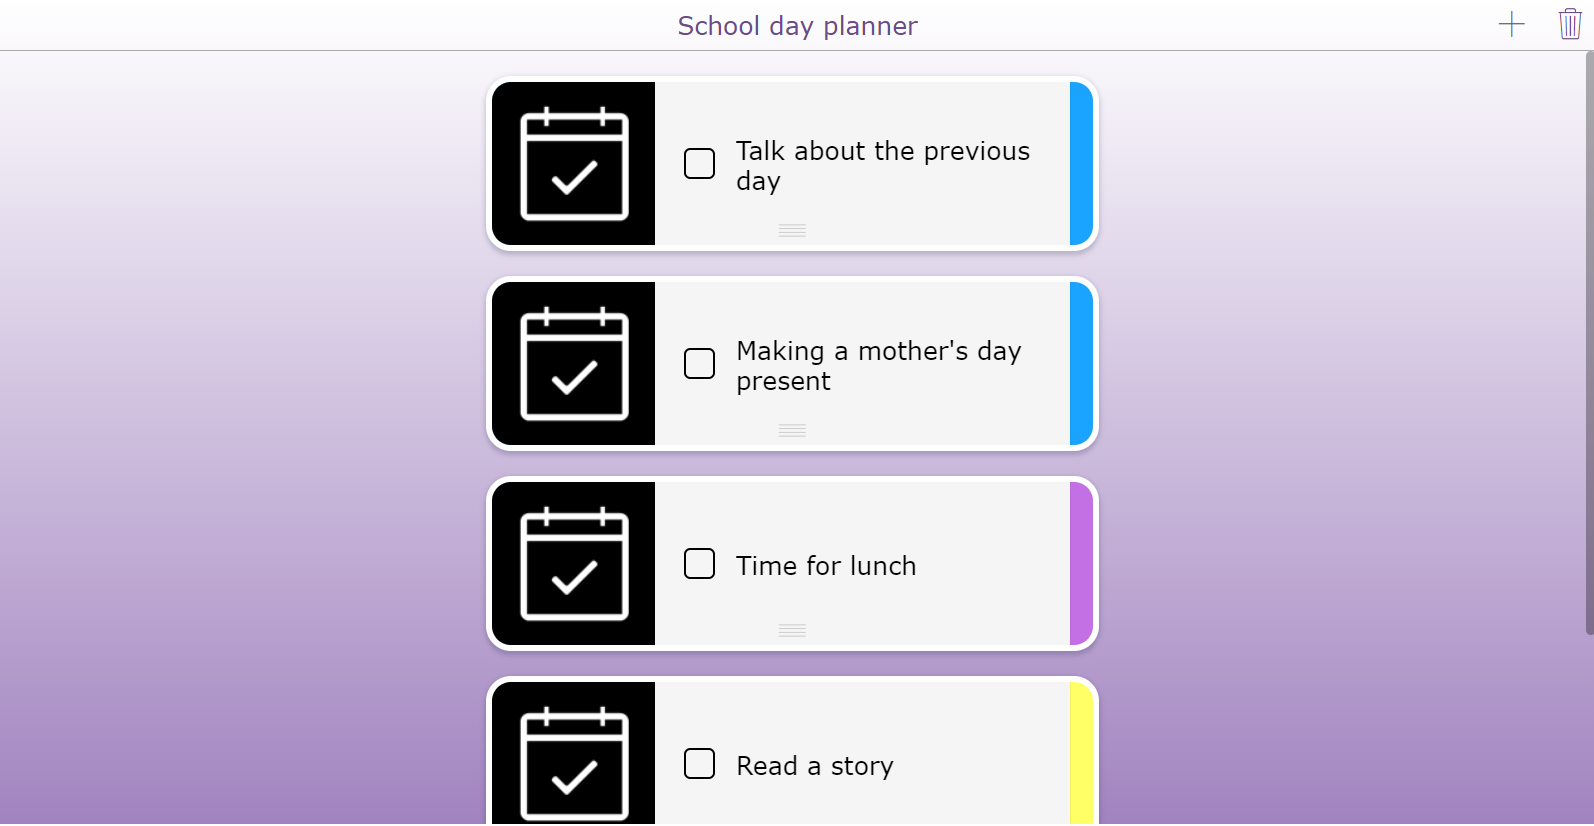 School day planner